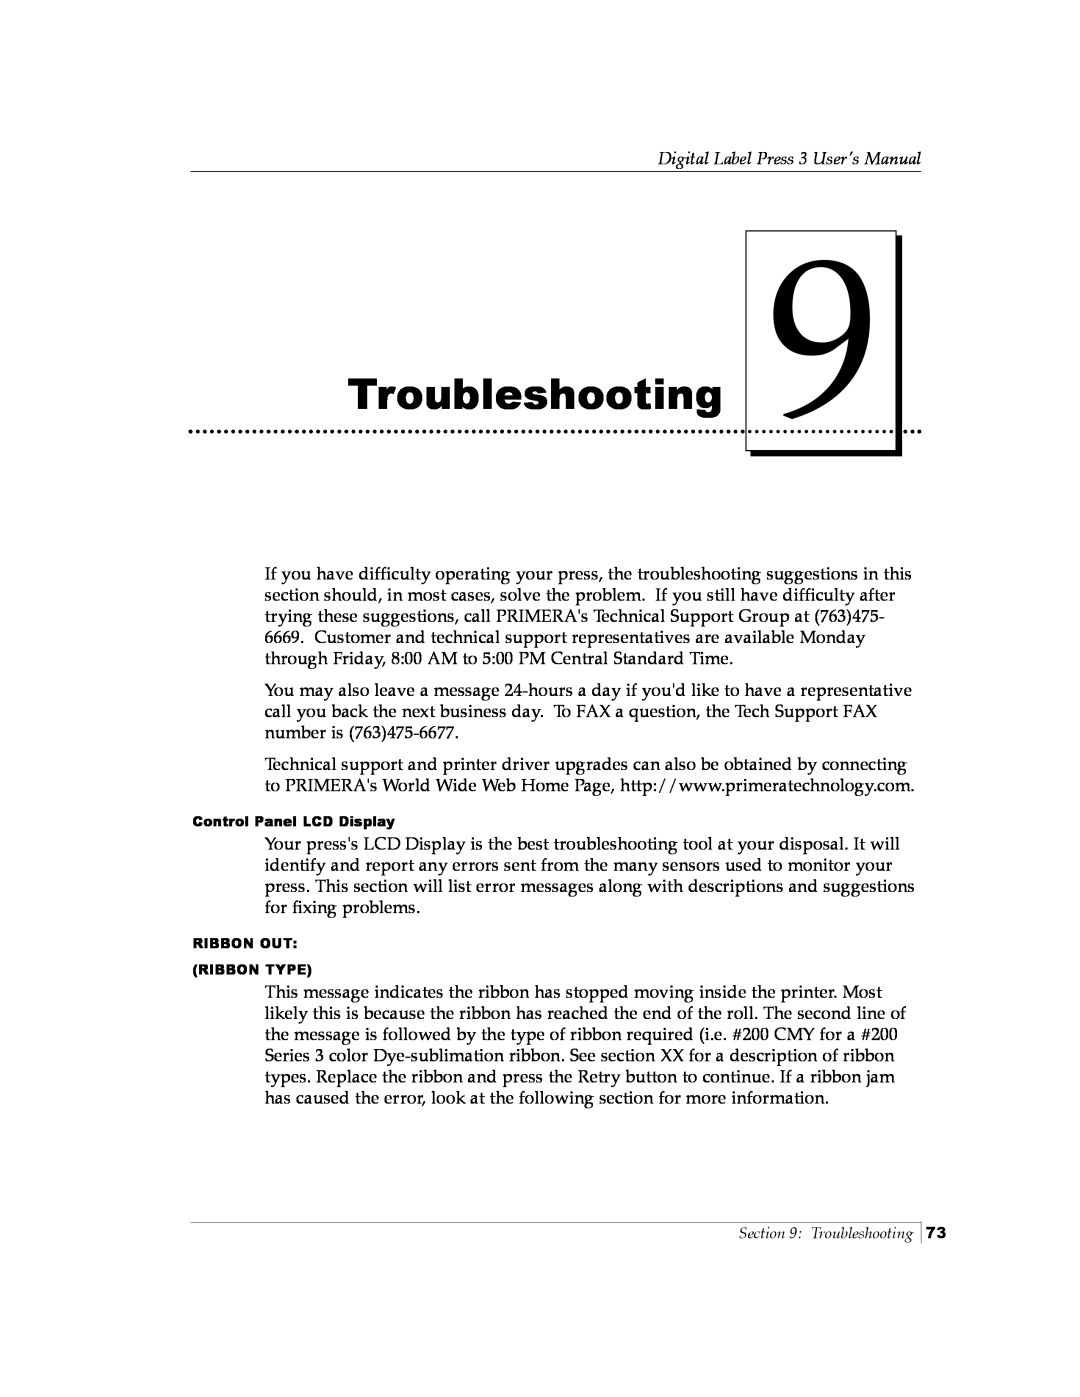 Primera Technology 510212 manual Troubleshooting, Digital Label Press 3 User’s Manual 